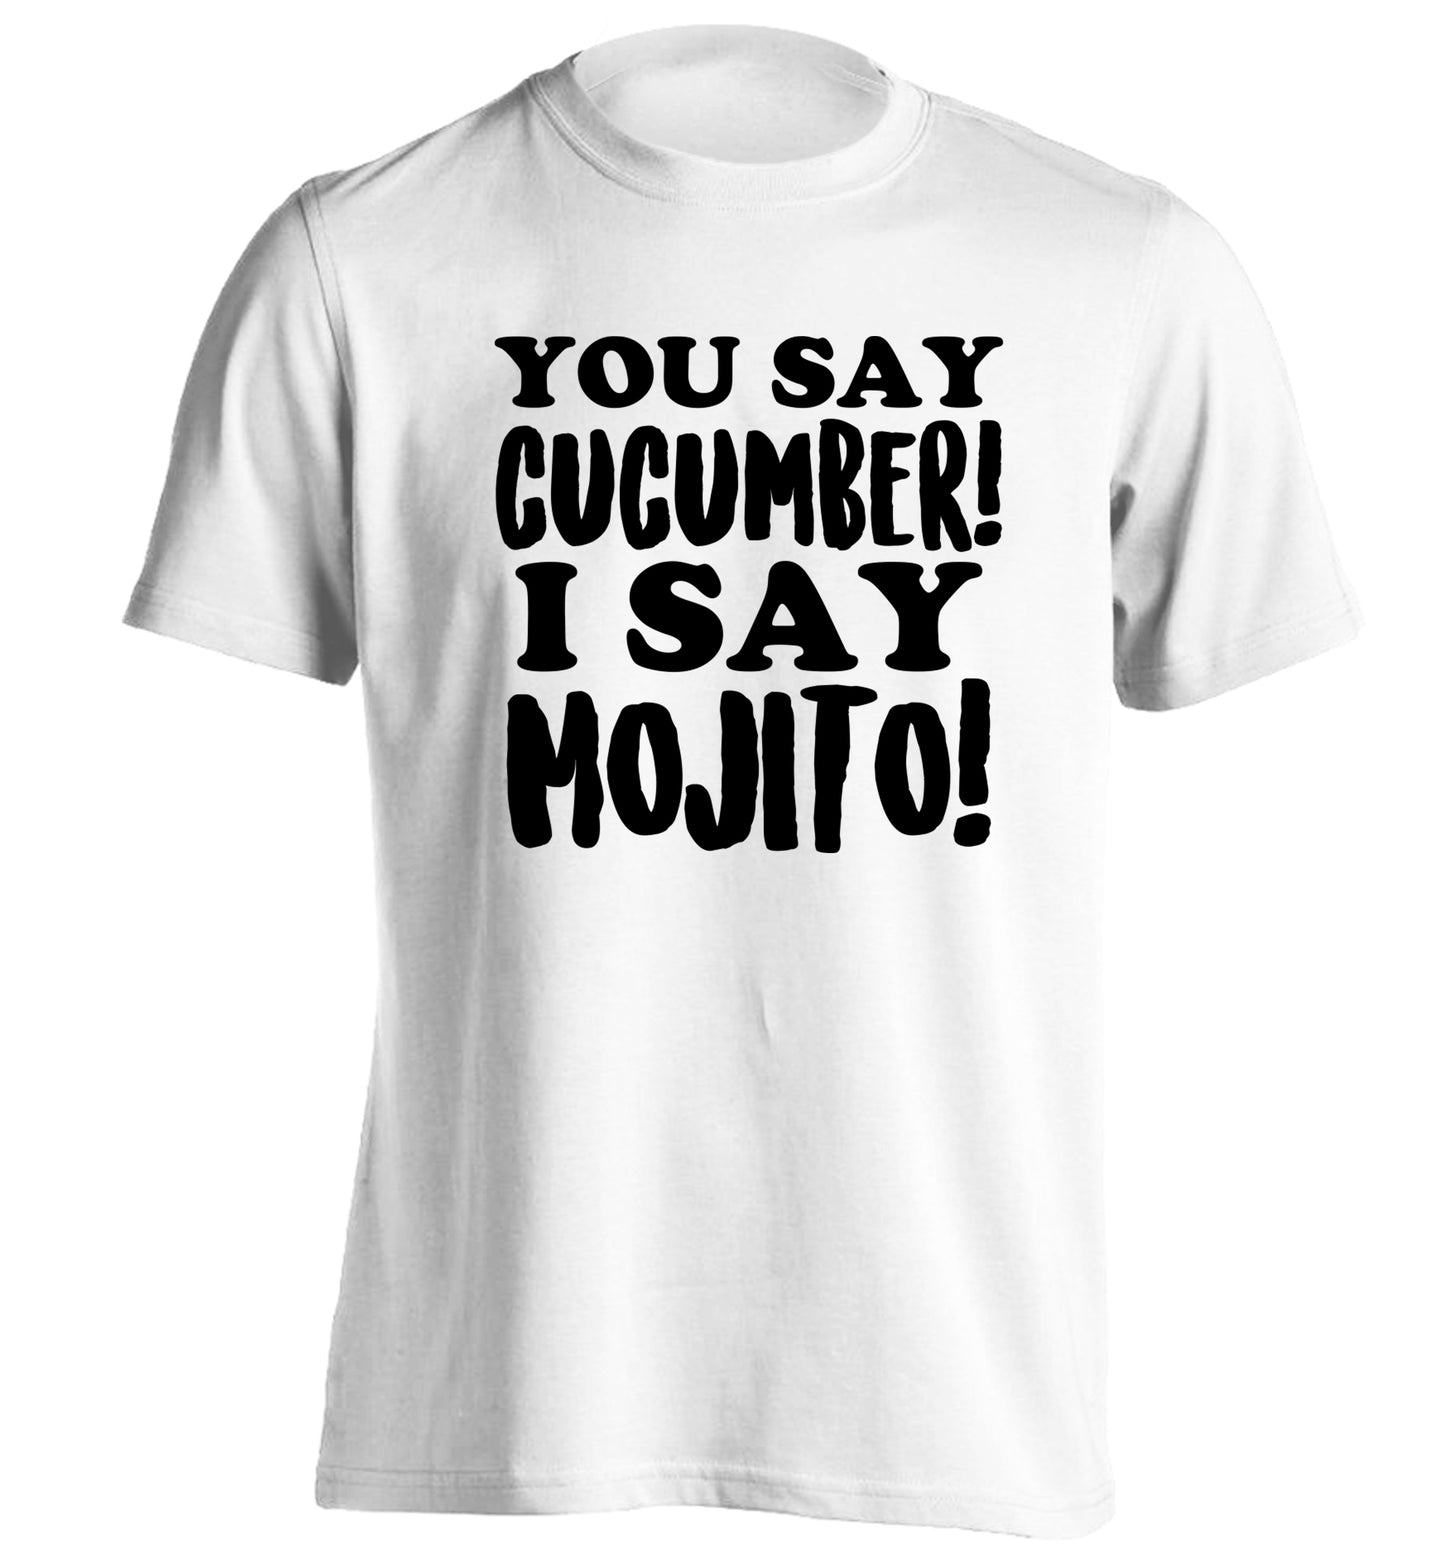 You say cucumber I say mojito! adults unisex white Tshirt 2XL